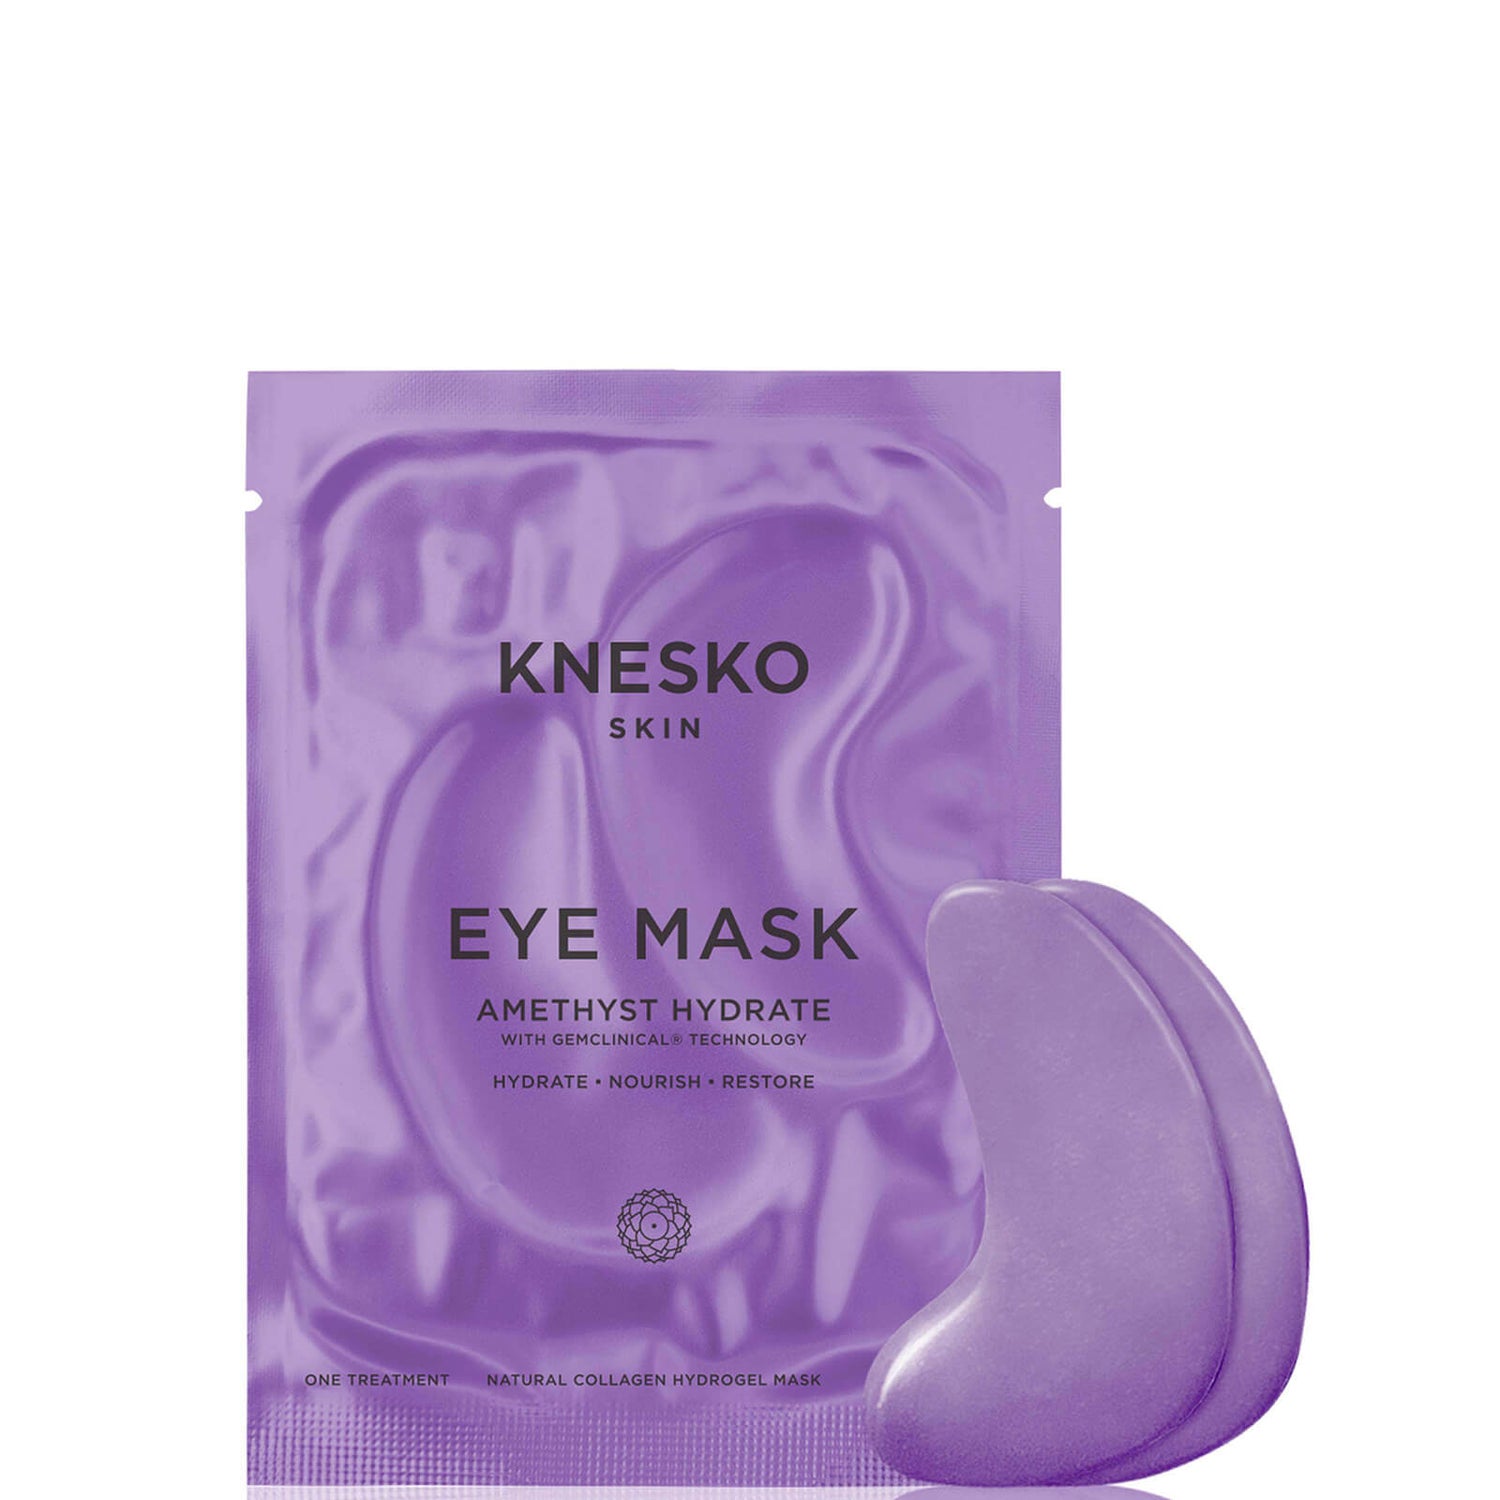 Knesko Skin Amethyst Hydrate Eye Mask (6 Treatments)